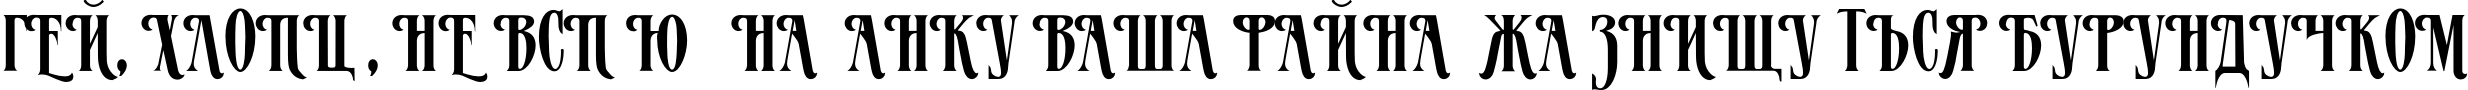 Пример написания шрифтом Patricia TYGRA текста на украинском